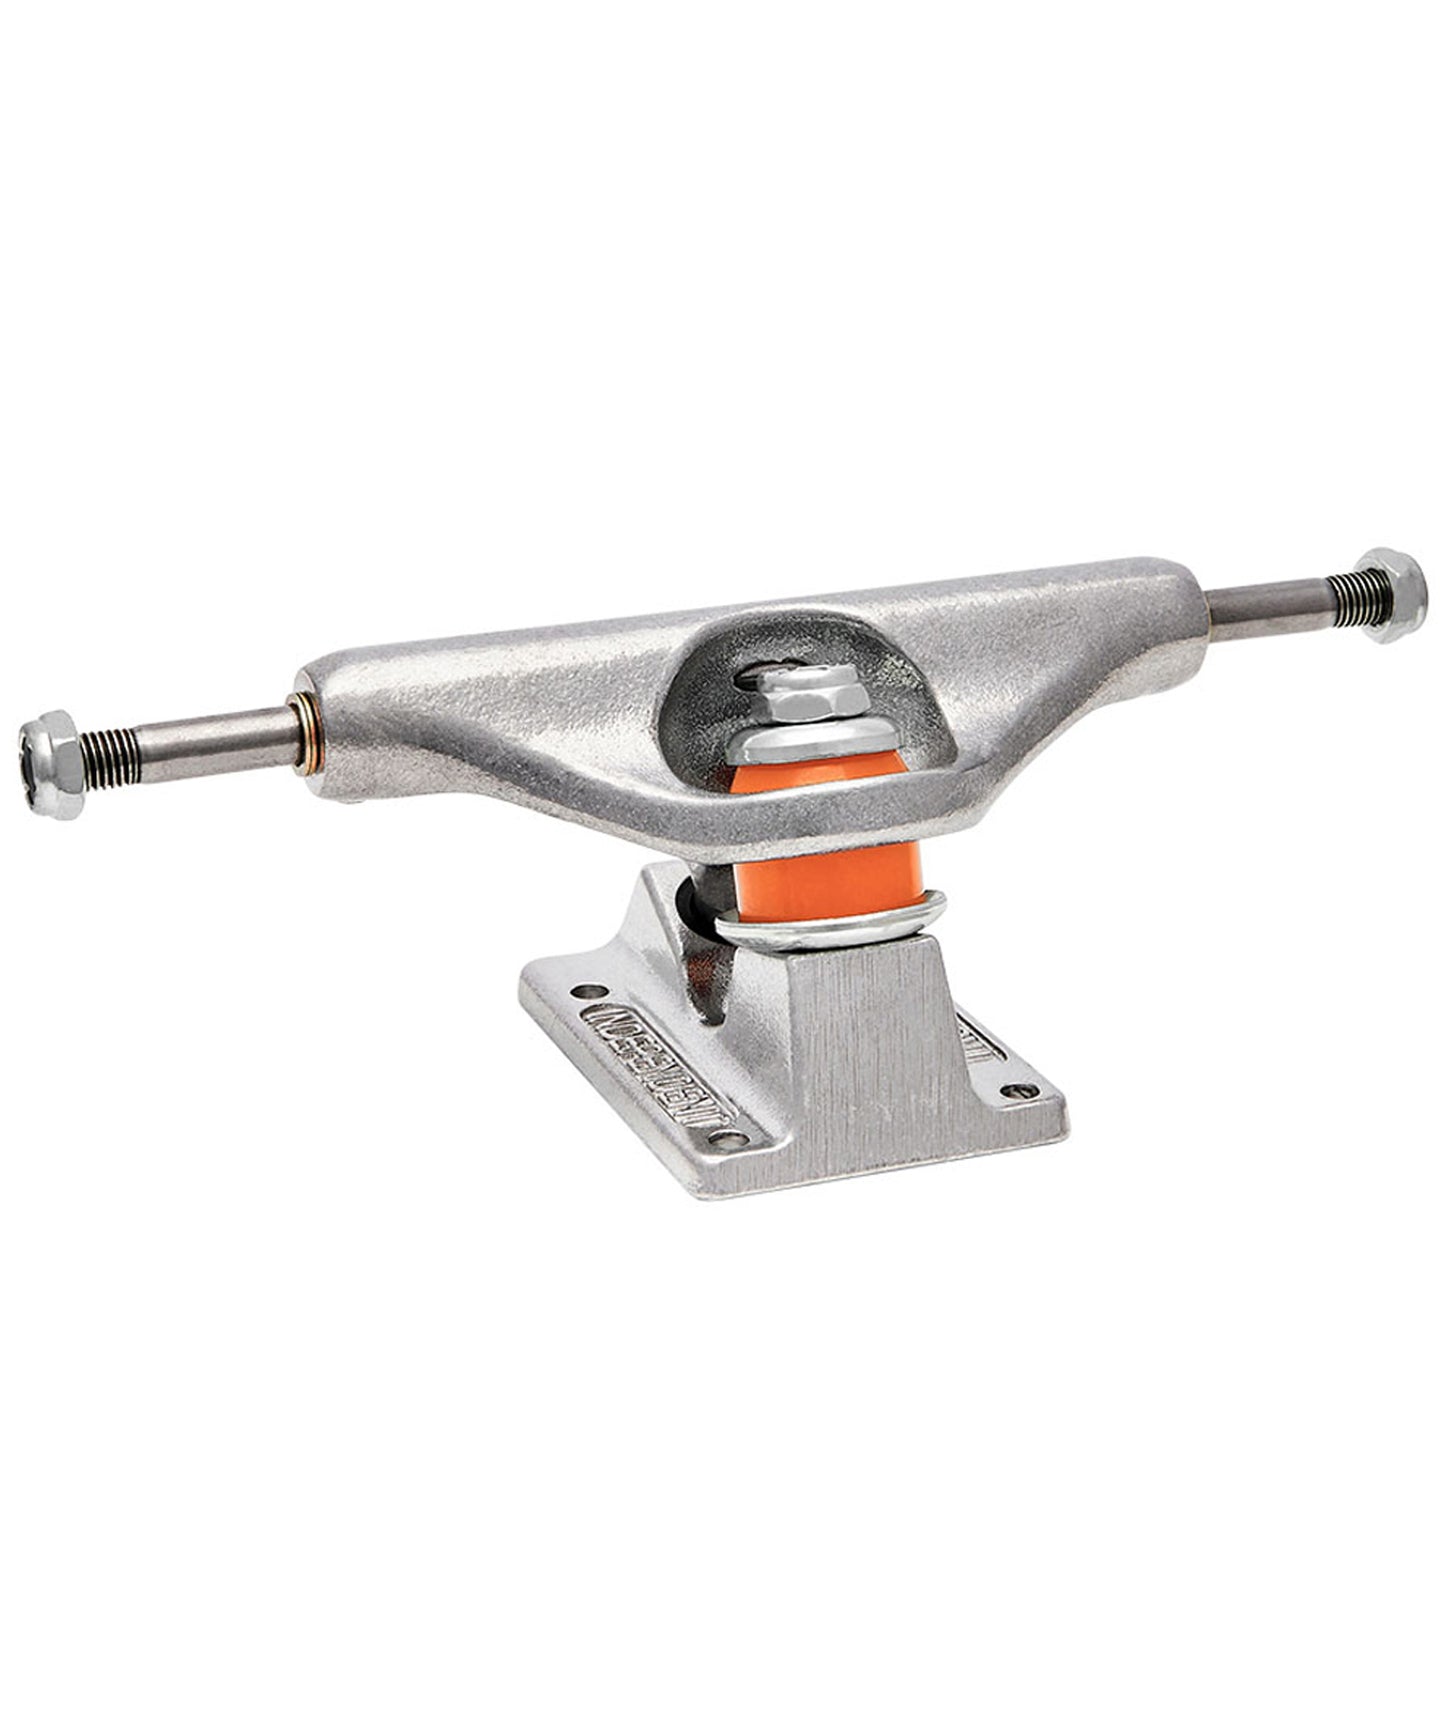 independent-standard-polished-129mm-ejes de calidad-para skate-hanger y placa base de aluminio-duraderos-independent-marca reputada en ejes.